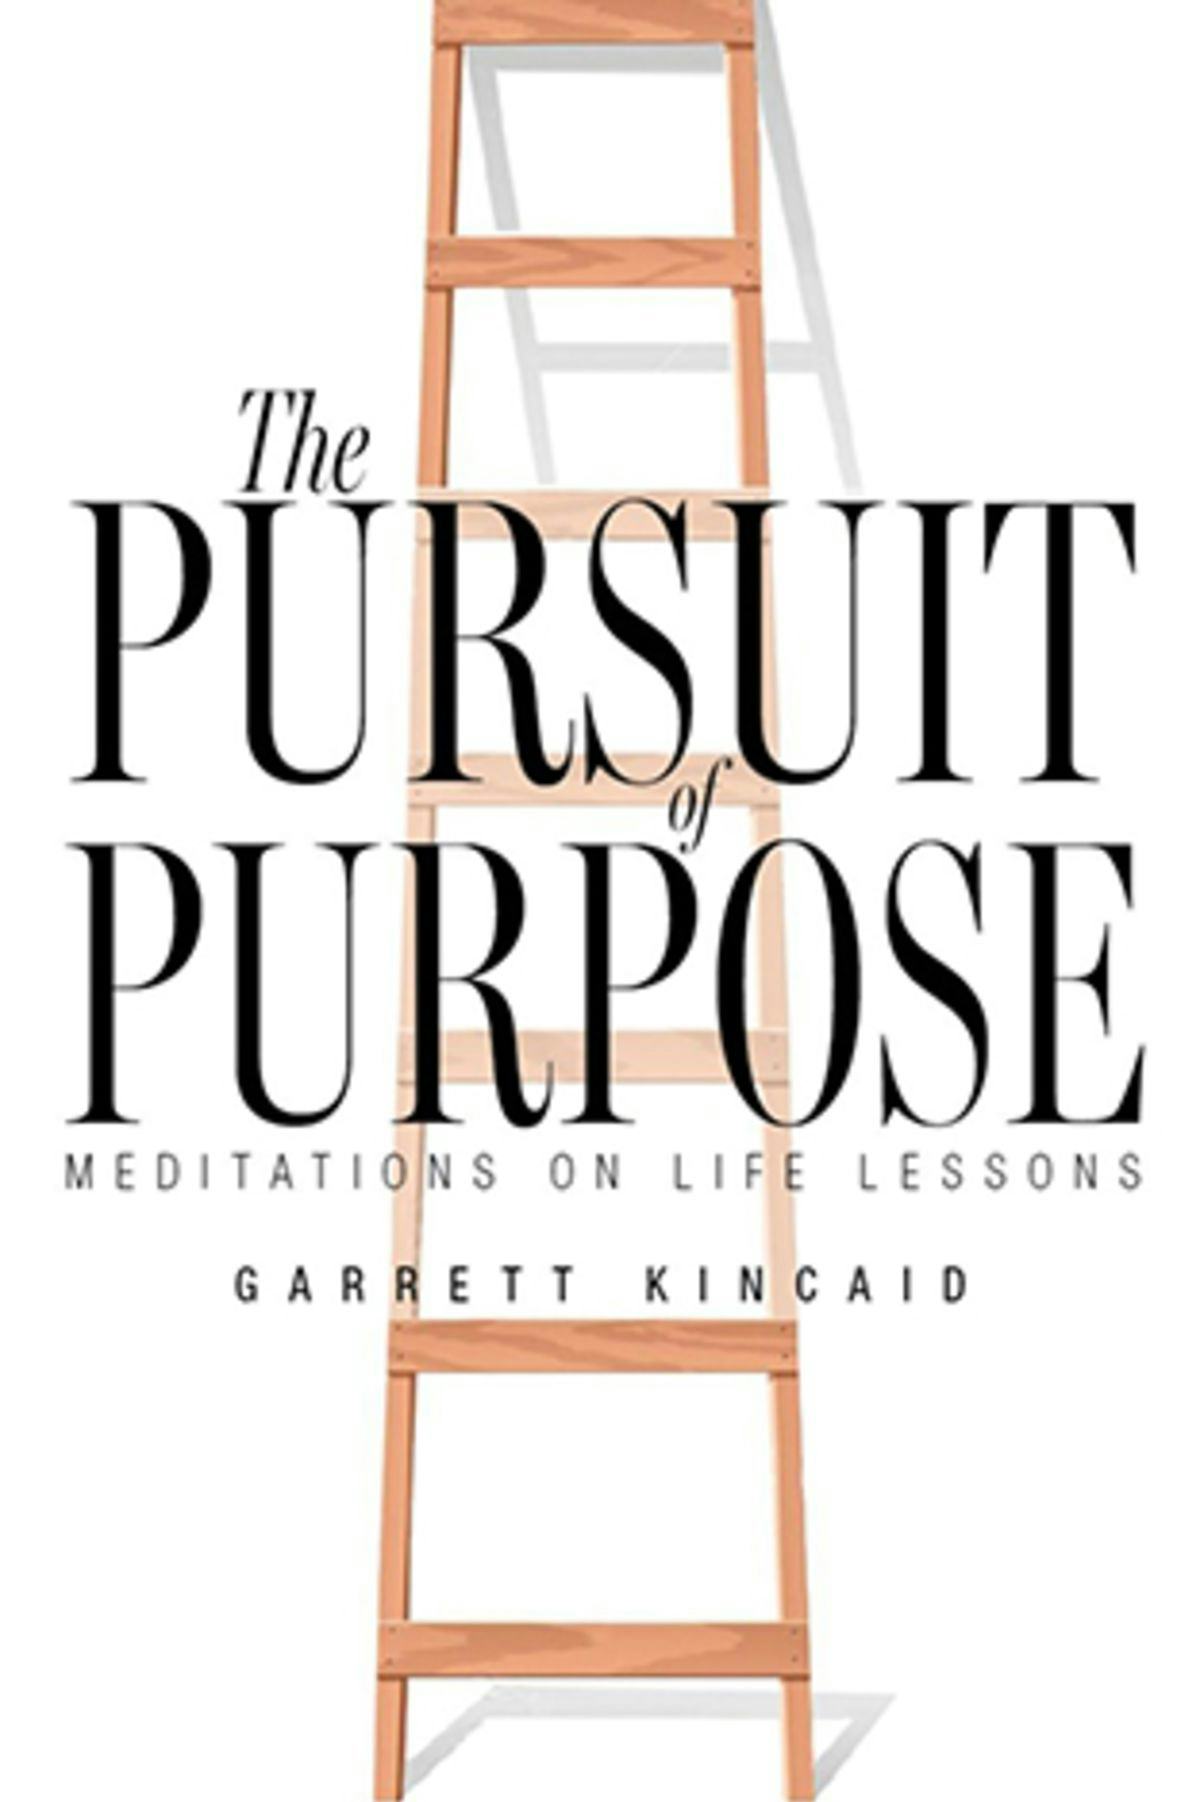 The cover of Garrett Kincaid's book.